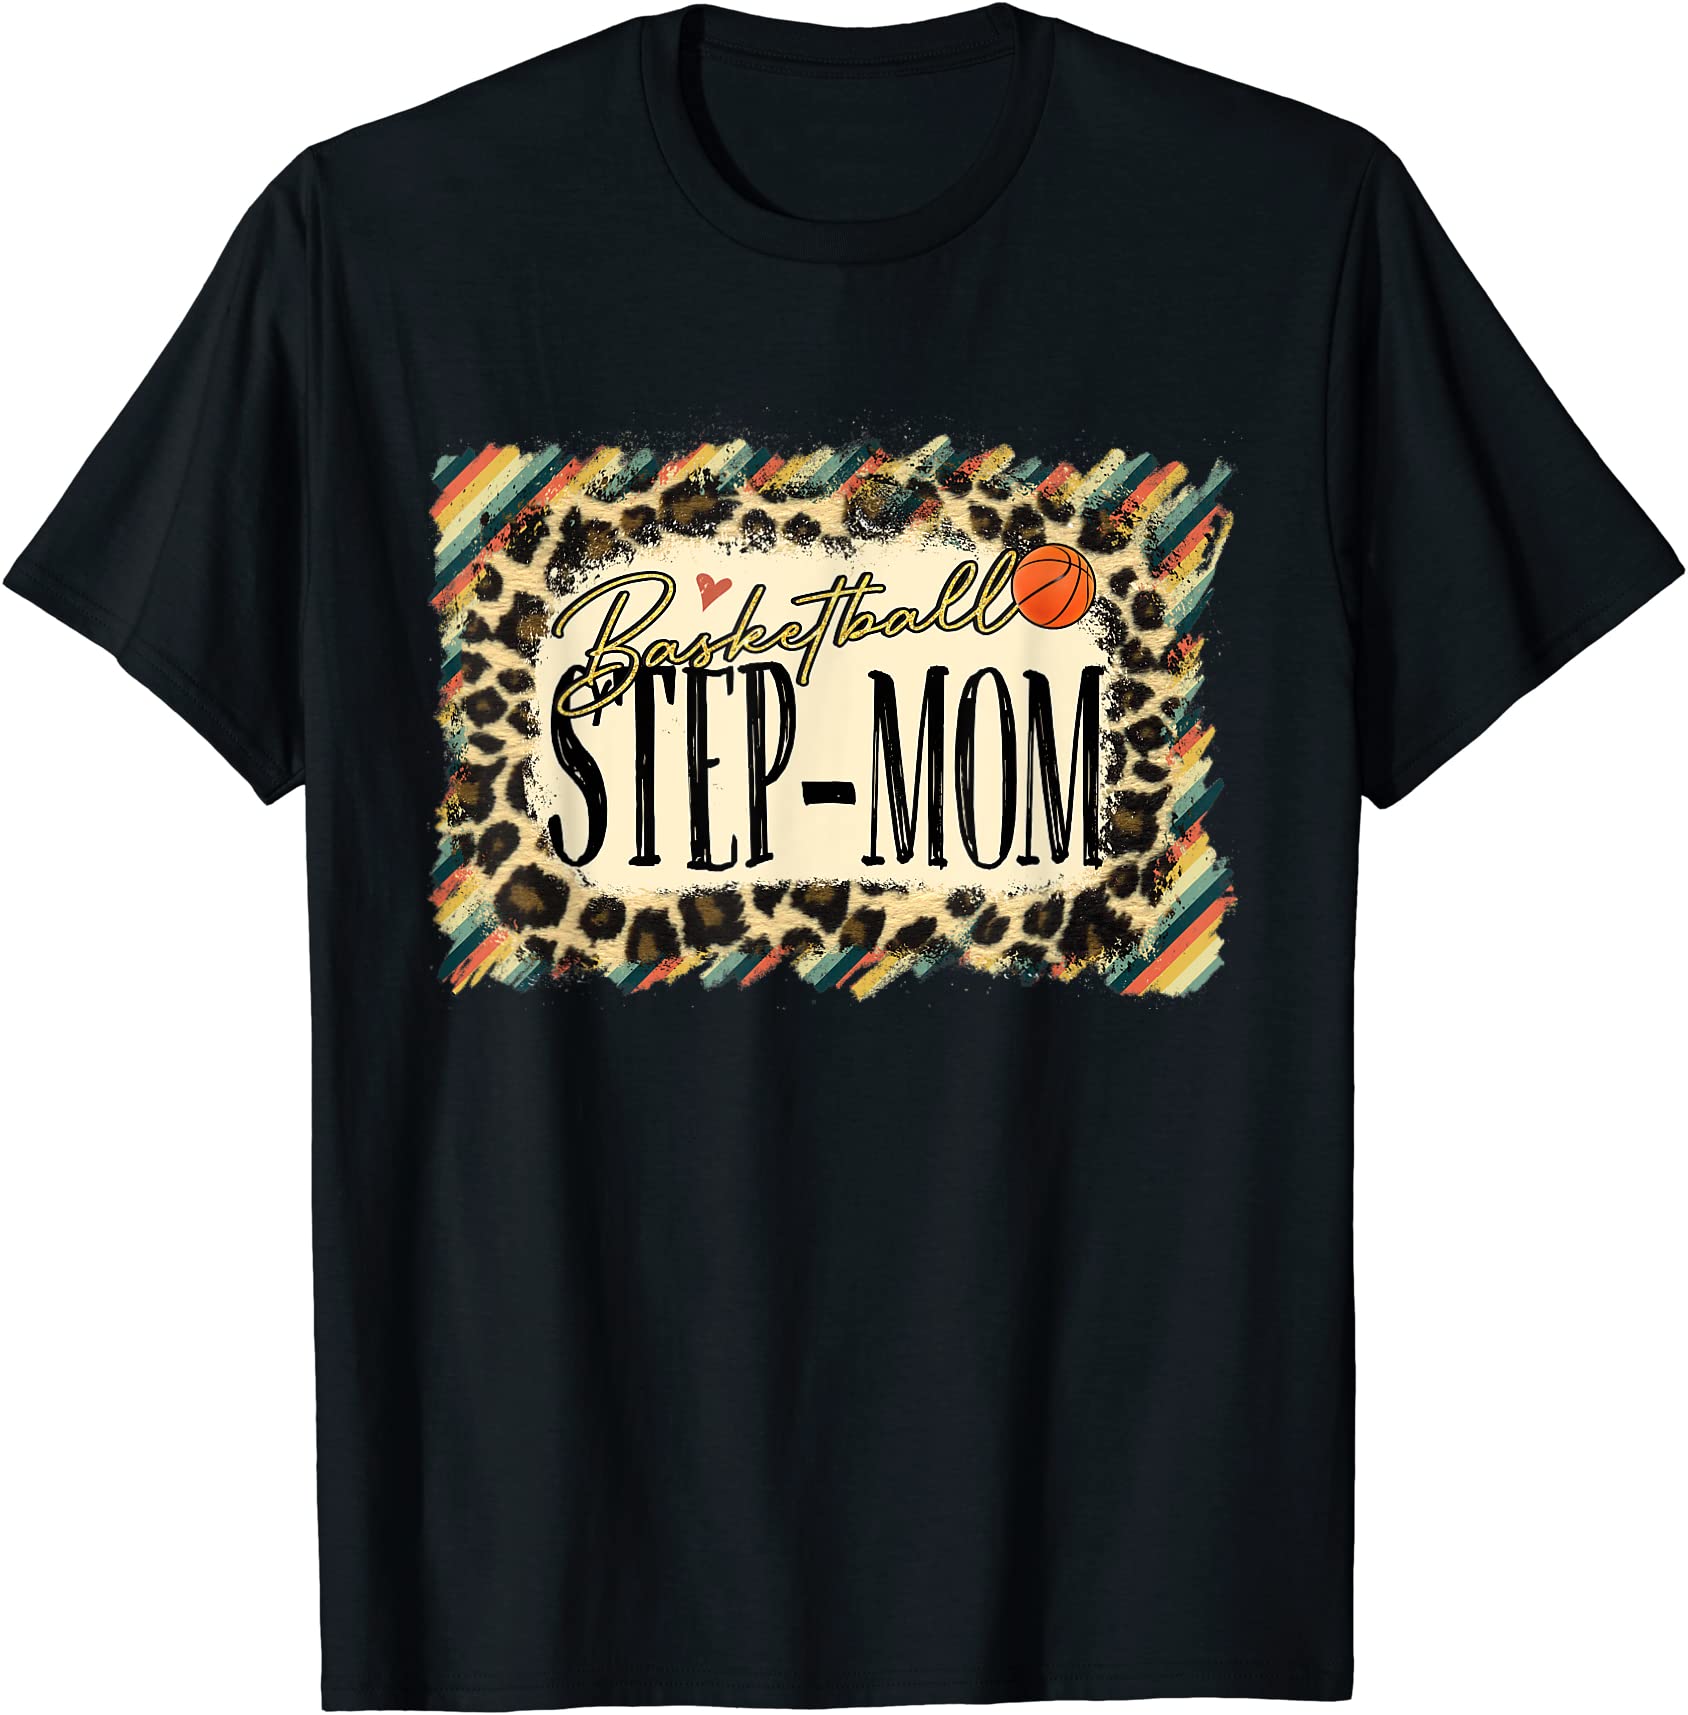 basketball step mom leopard t shirt men - Buy t-shirt designs